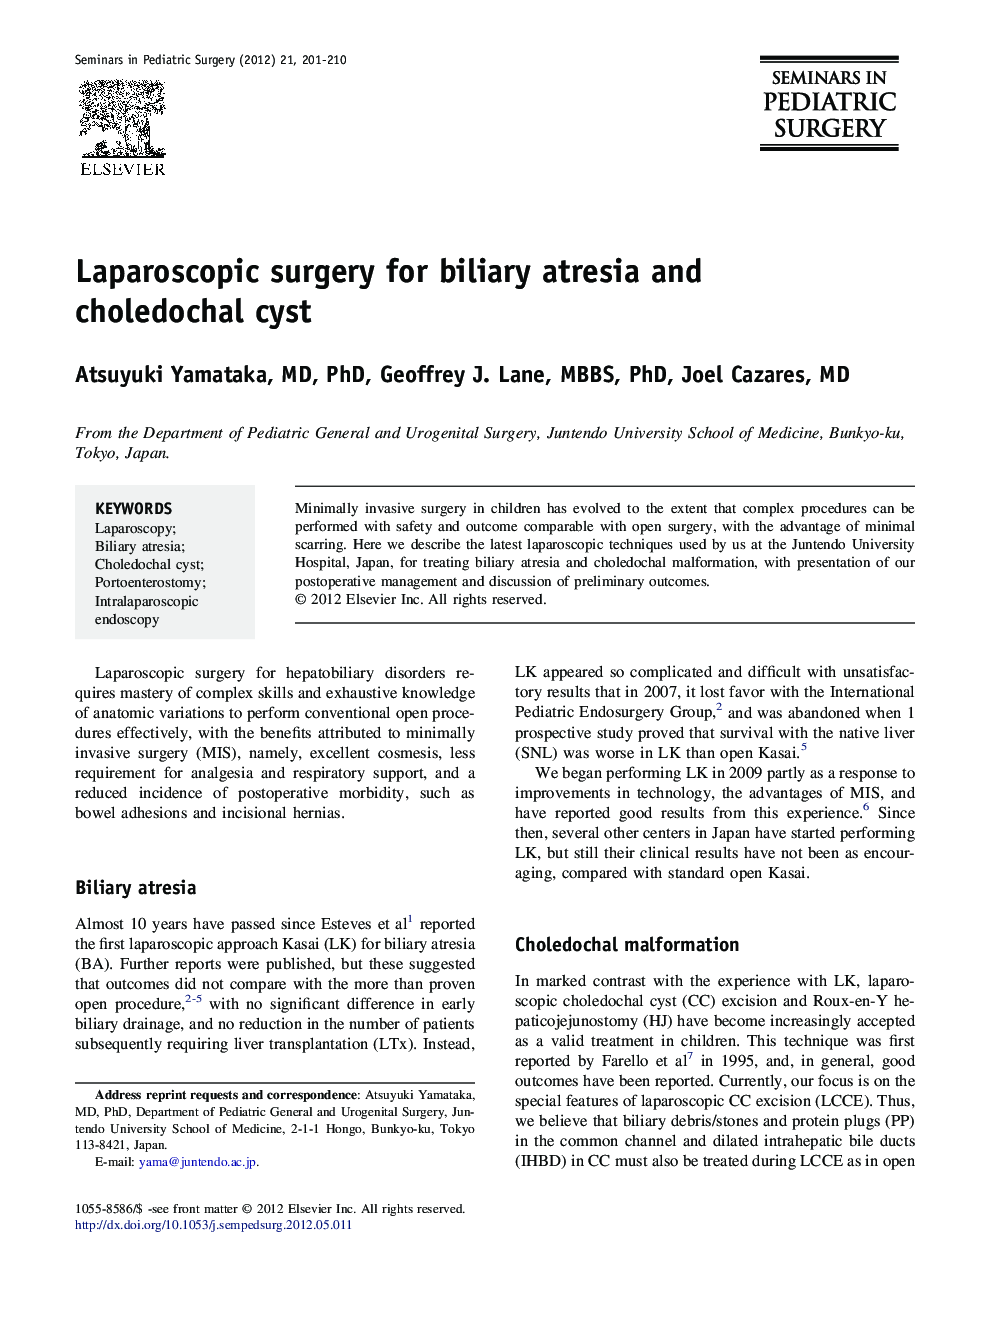 Laparoscopic surgery for biliary atresia and choledochal cyst